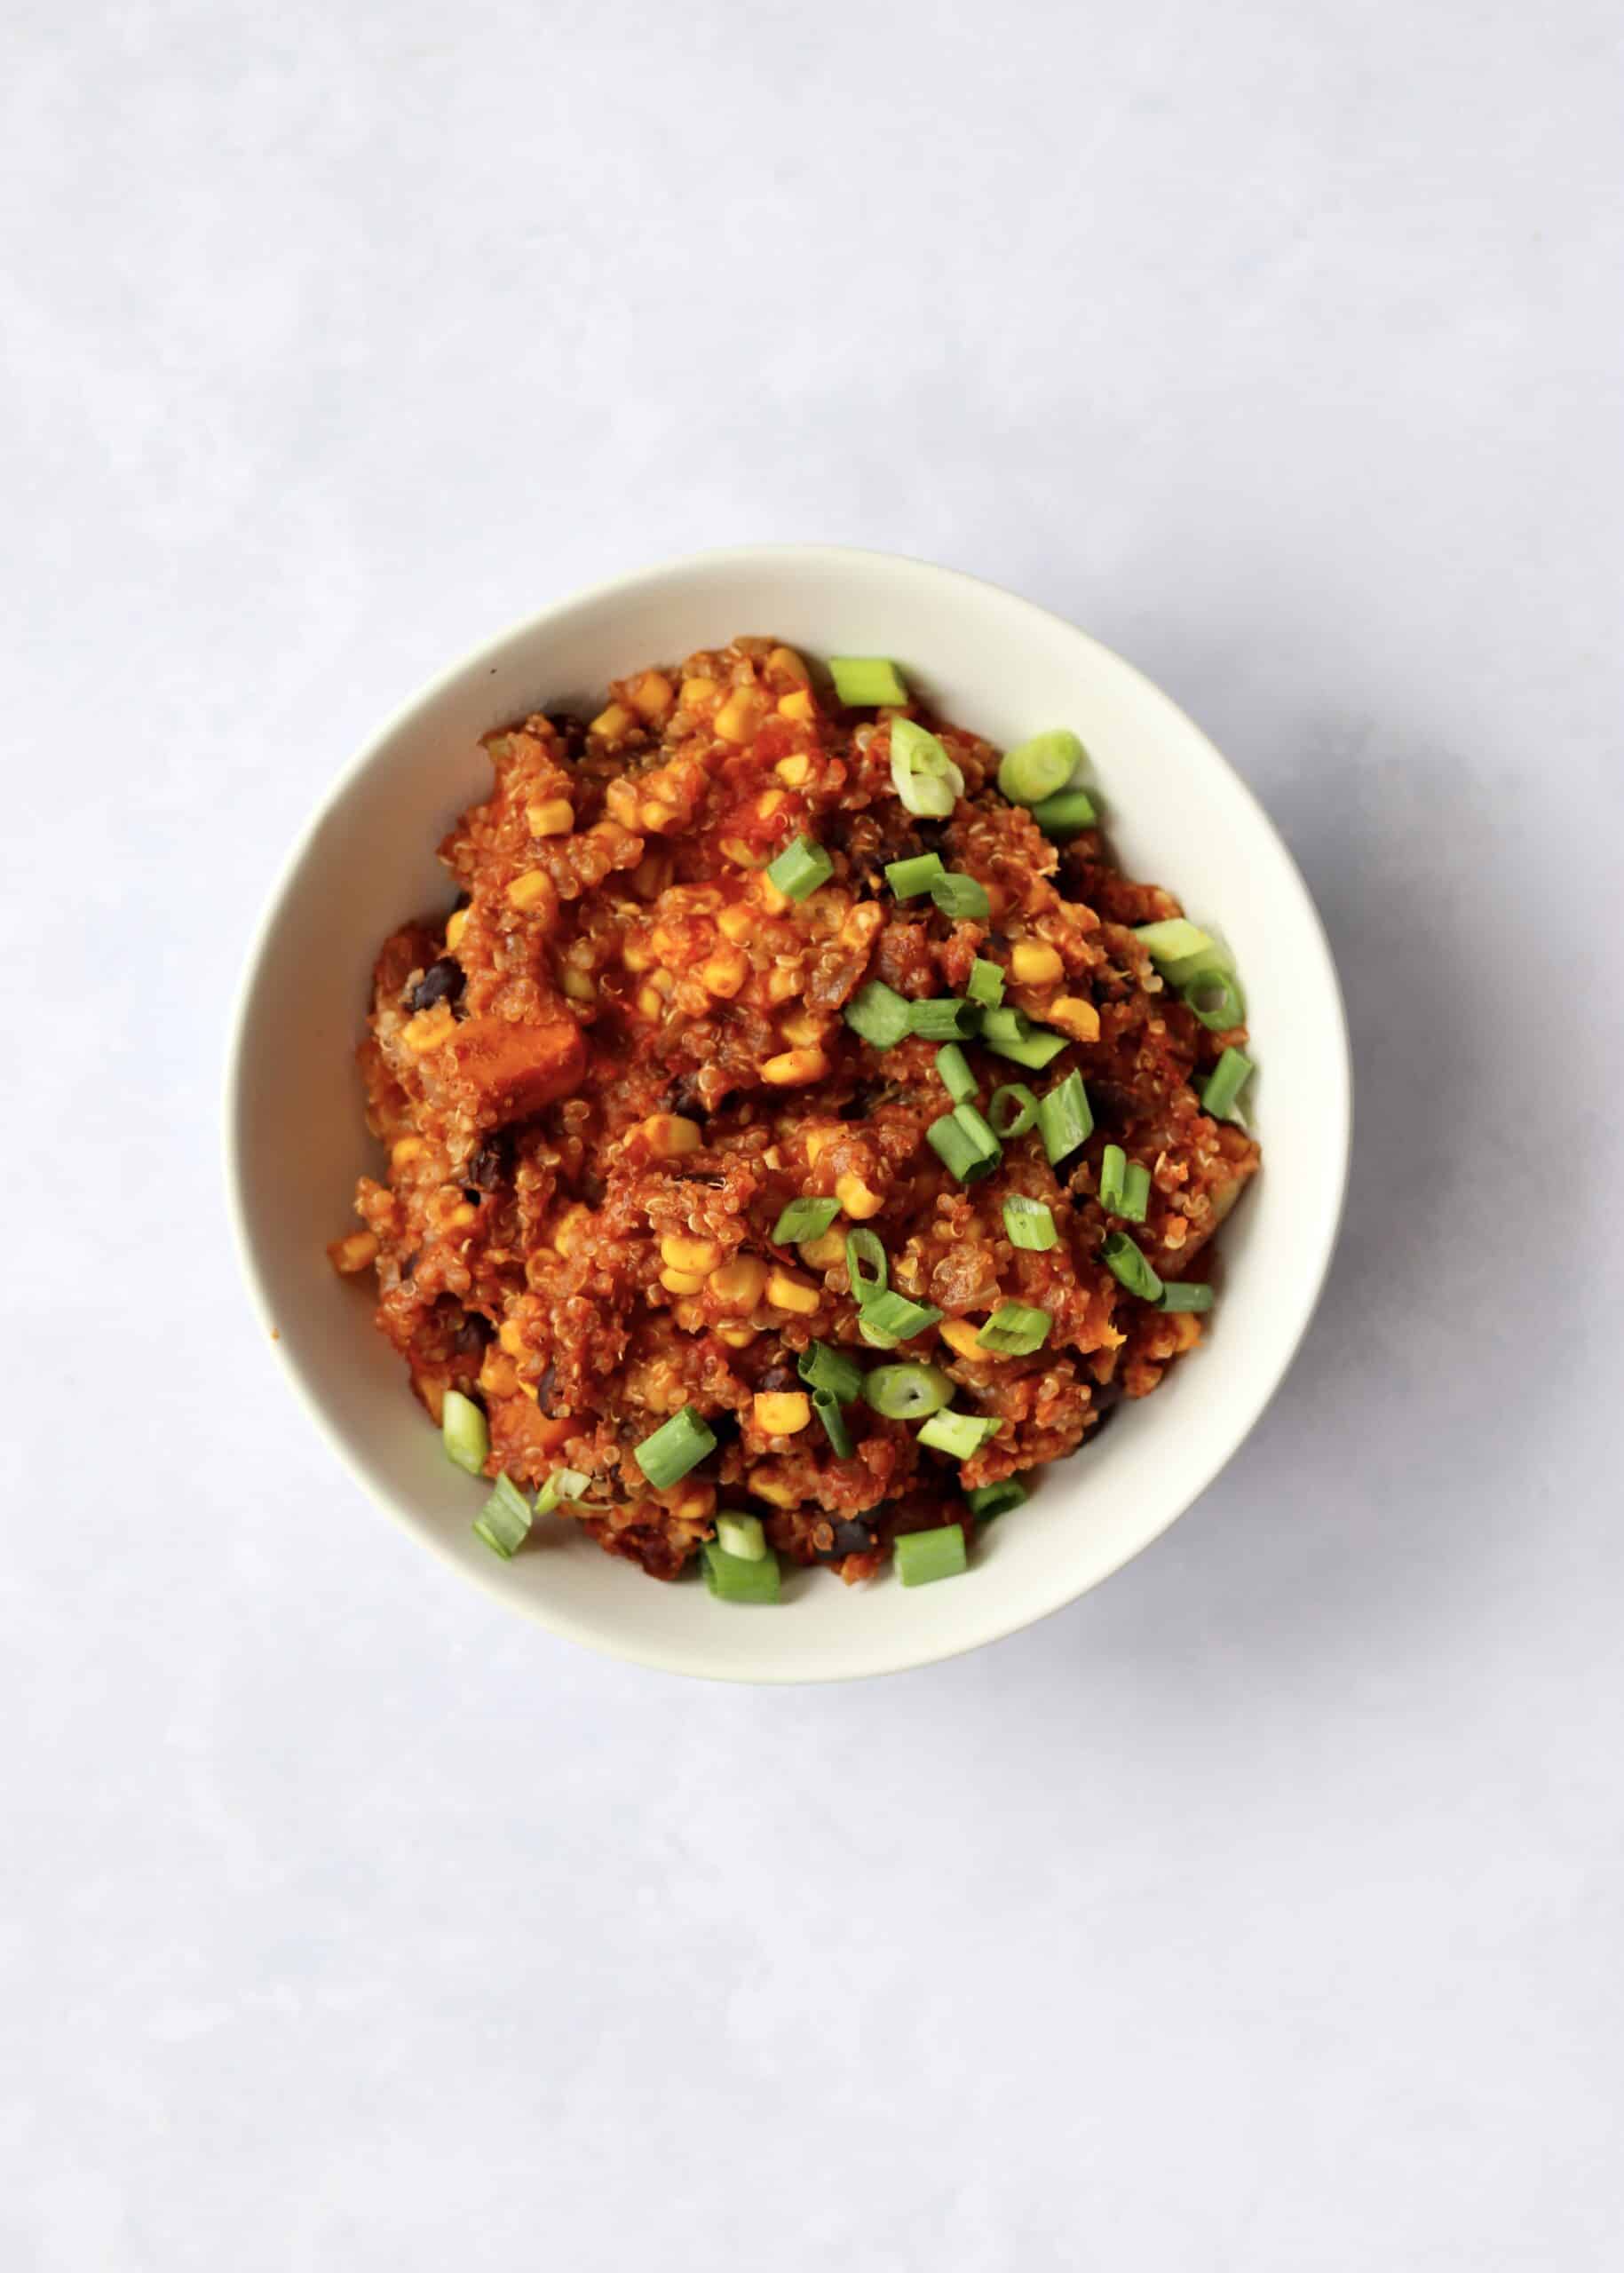 https://kathleenscravings.com/wp-content/uploads/2020/08/Slow-Cooker-Vegan-Mexican-Quinoa-bowl-scaled.jpeg